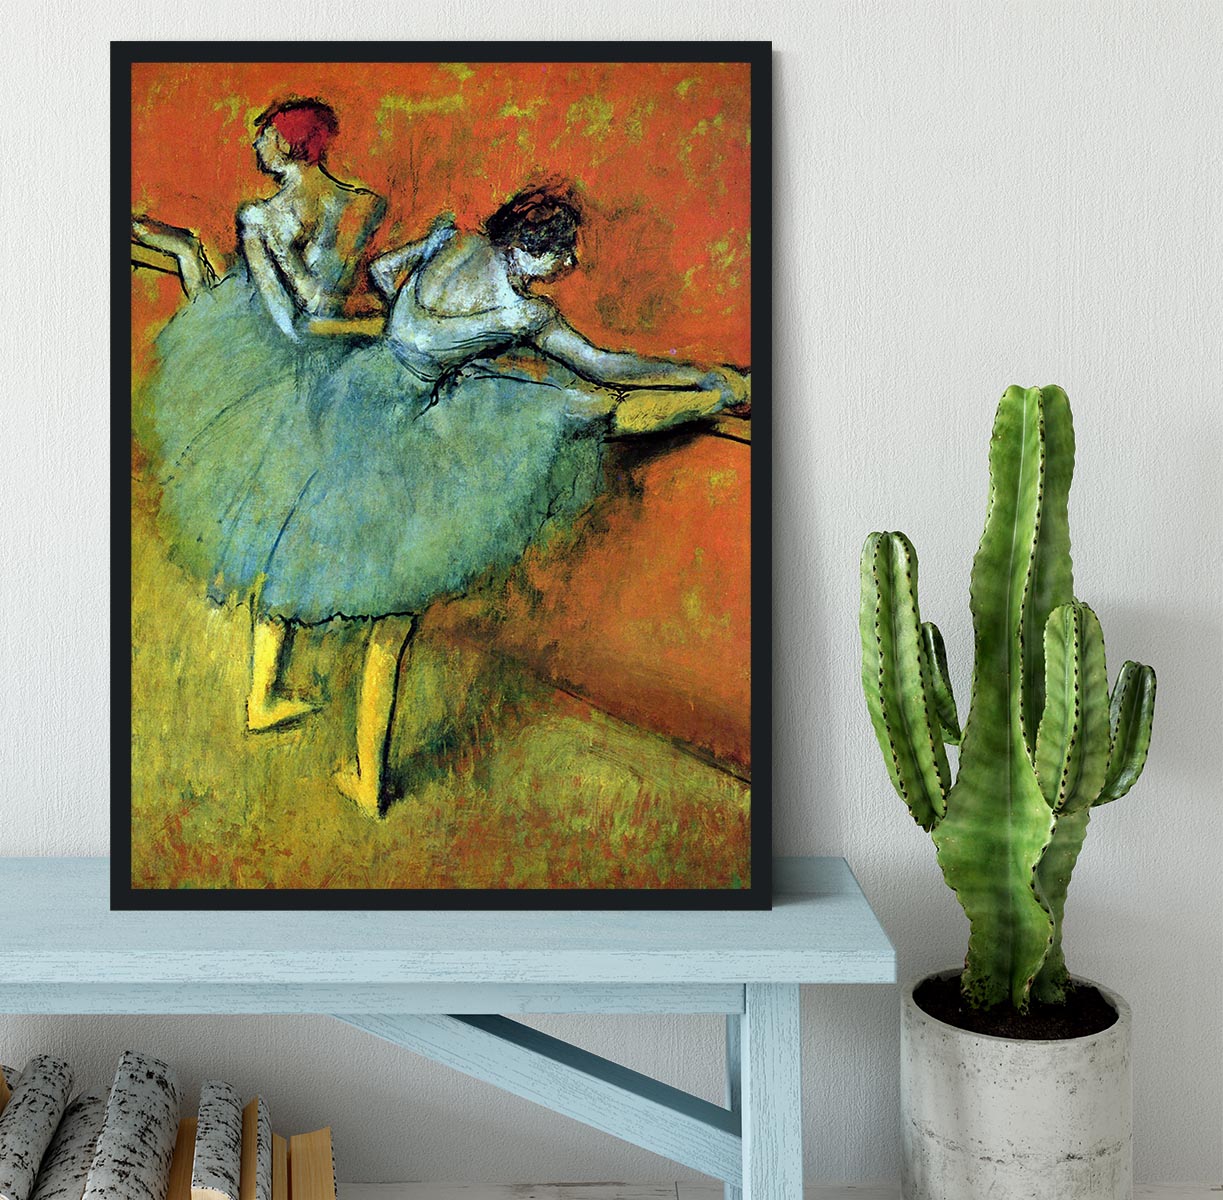 Dancers at the bar 1 by Degas Framed Print - Canvas Art Rocks - 2